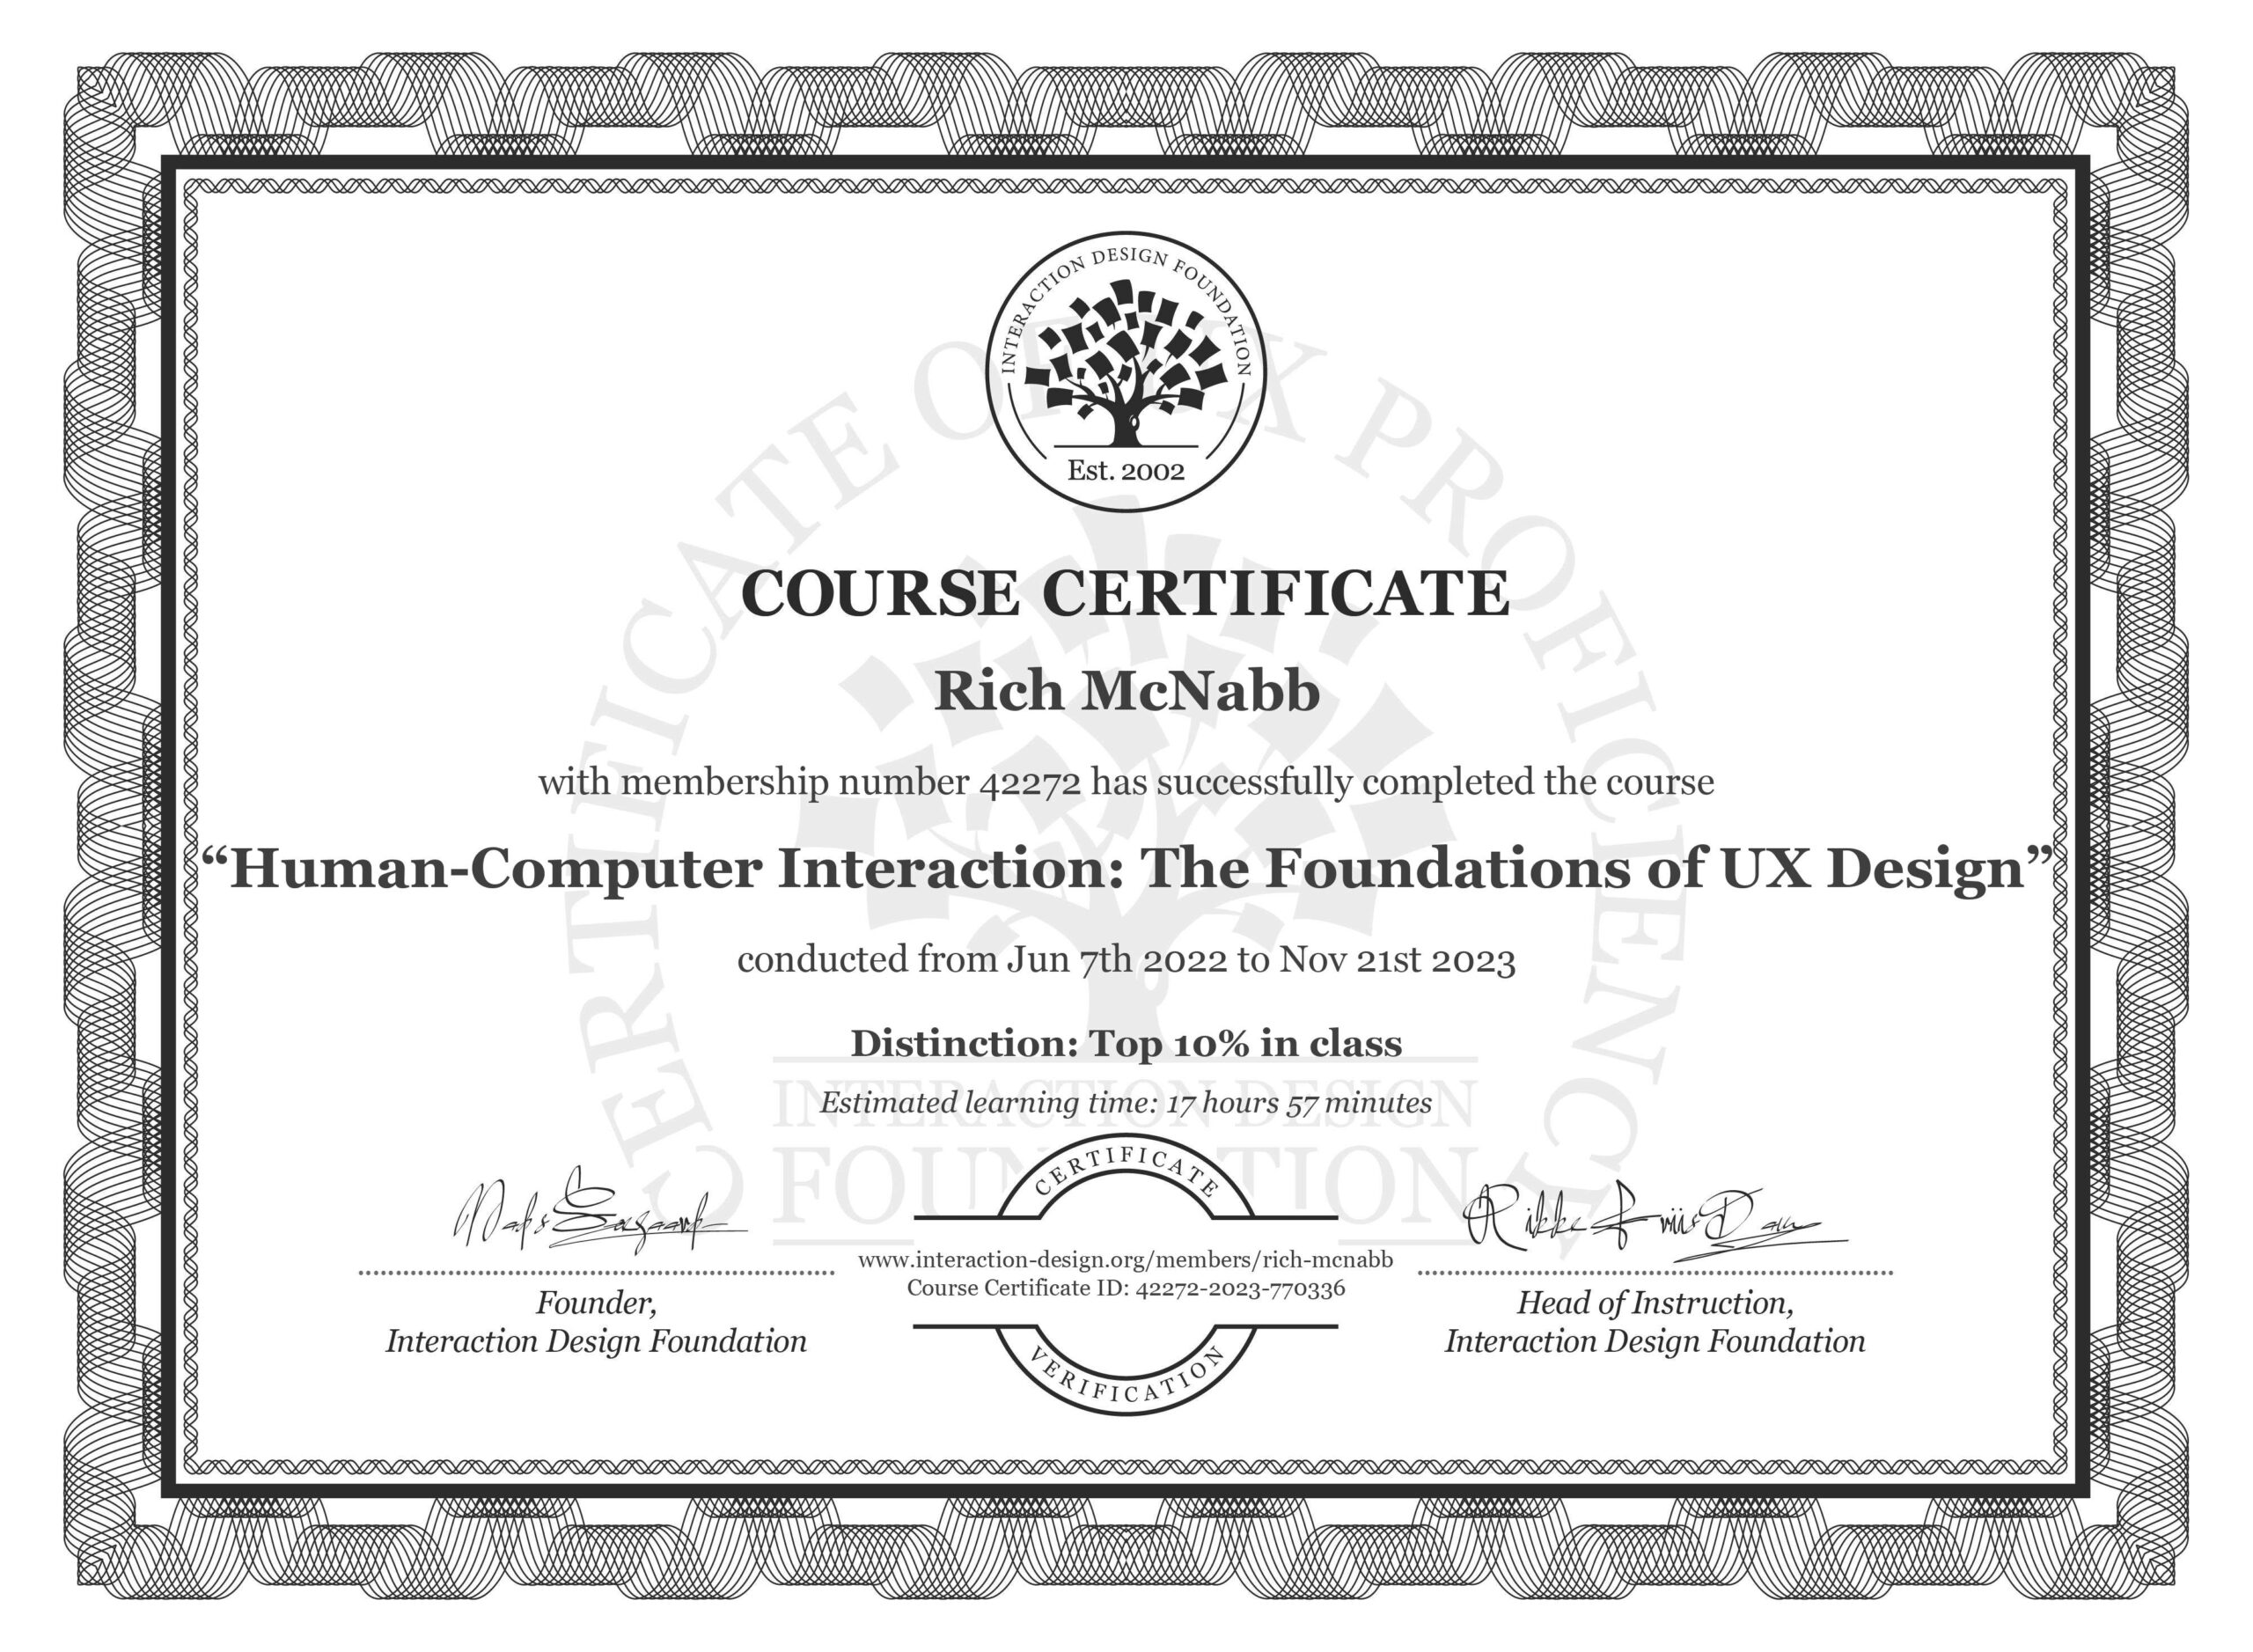 course-certificate-hci-foundations-of-ux-design